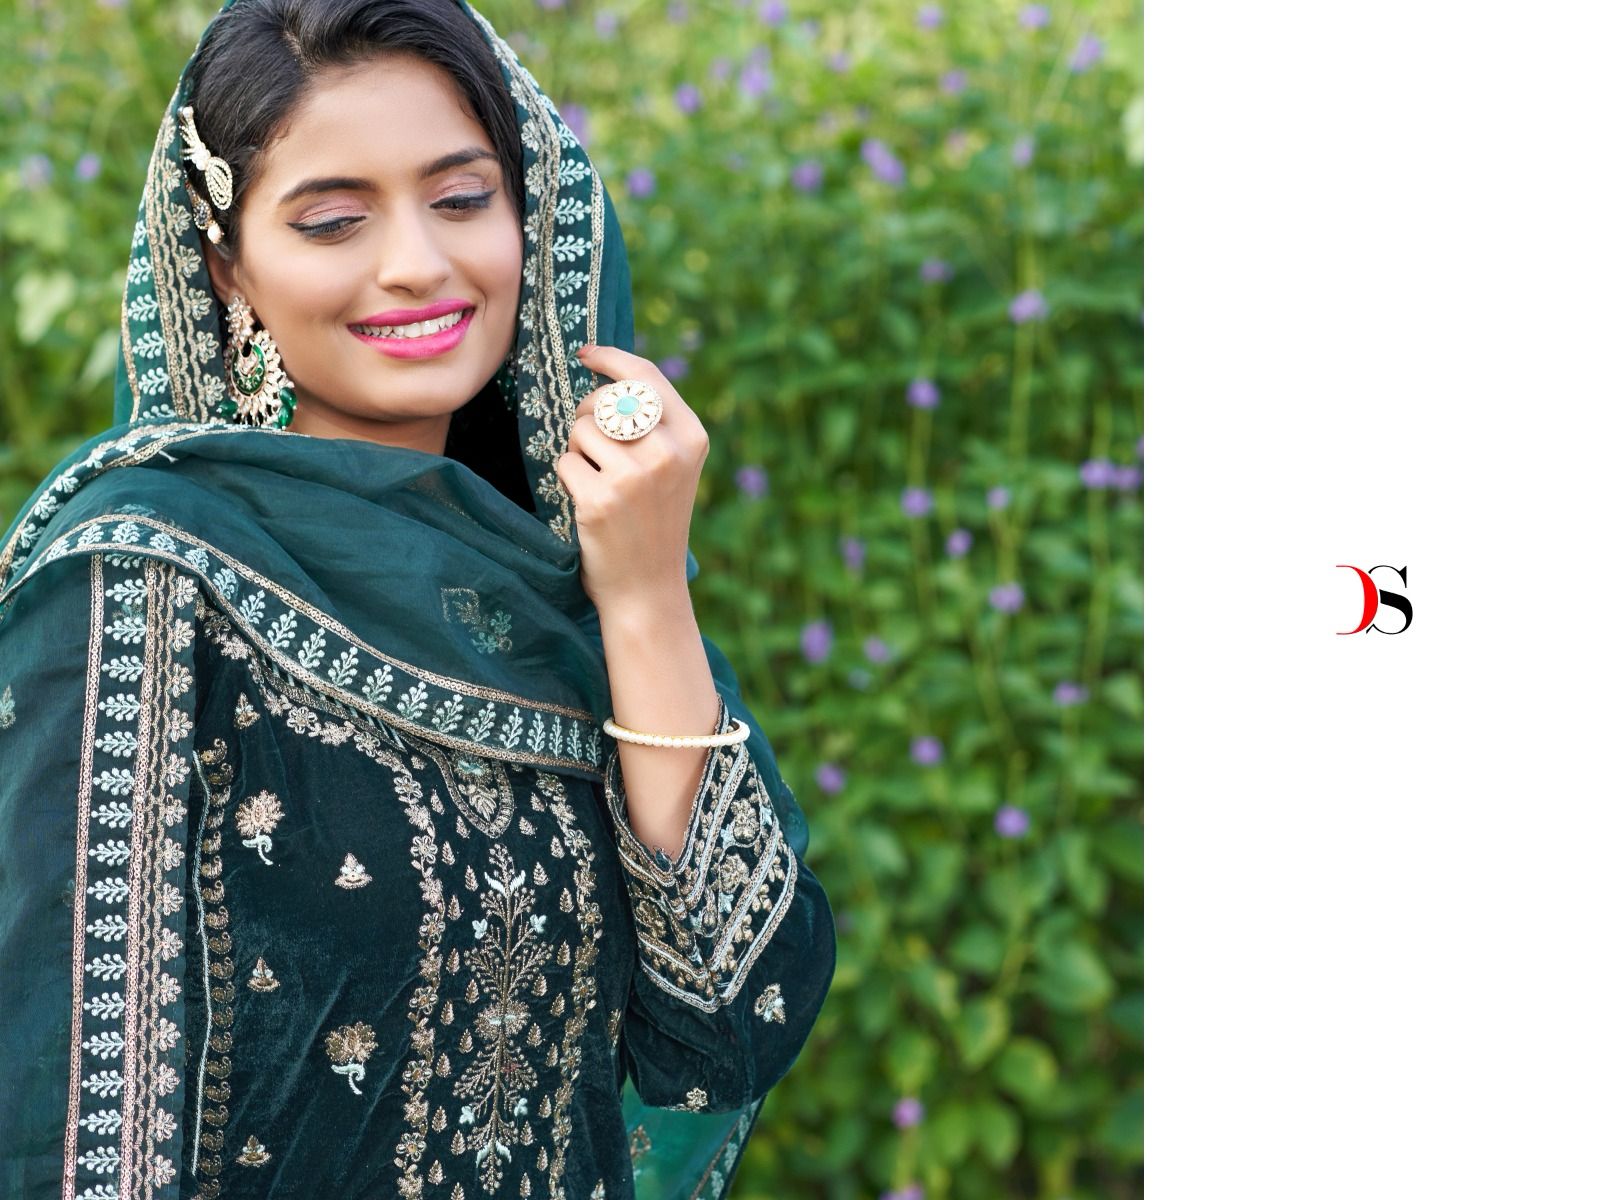 Deepsy Suits Velvet 23-4 Readymade Collection Pakistani Suits Supplier In Surat - jilaniwholesalesuit